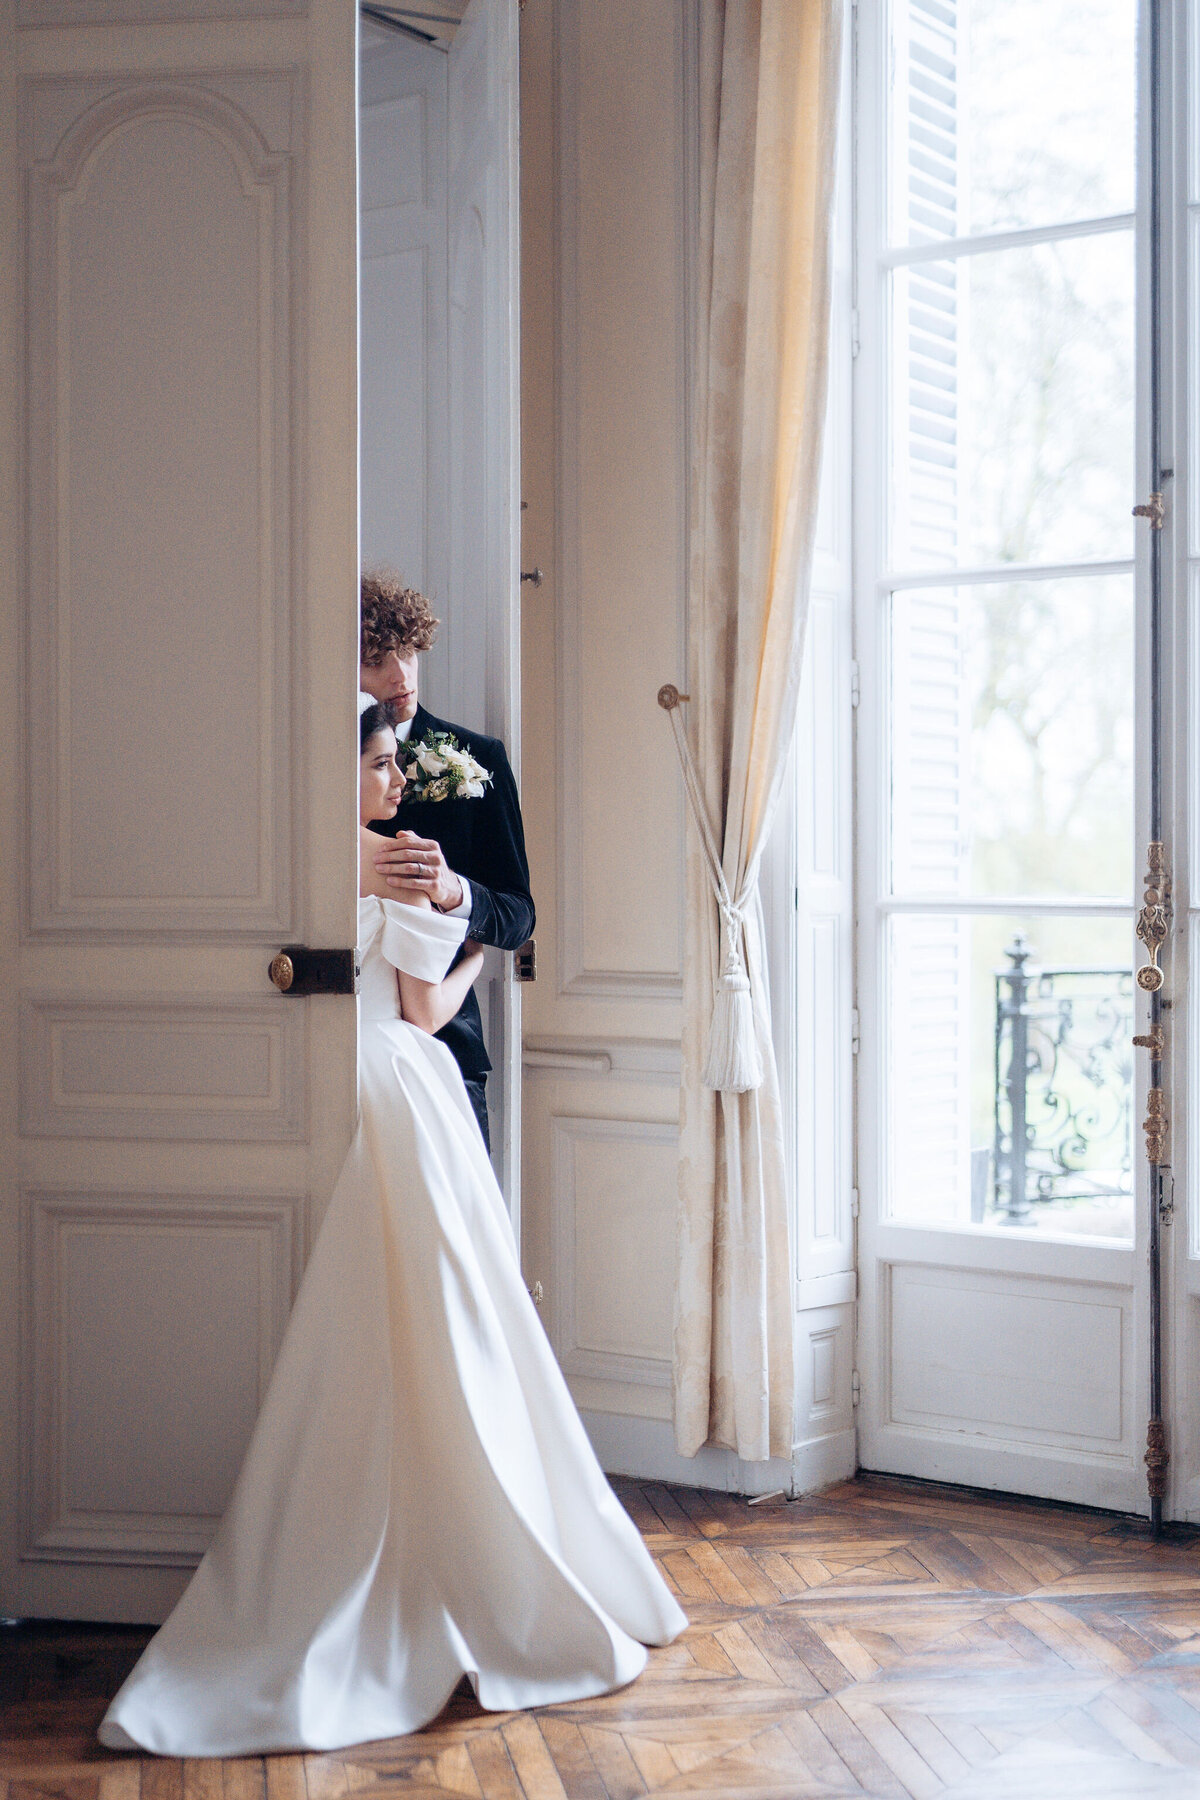 084-Chateau-de-Santeny-Paris-France-Inspiration-Love-Story Elopement-Cinematic-Romance-Destination-Wedding-Editorial-Luxury-Fine-Art-Lisa-Vigliotta-Photography